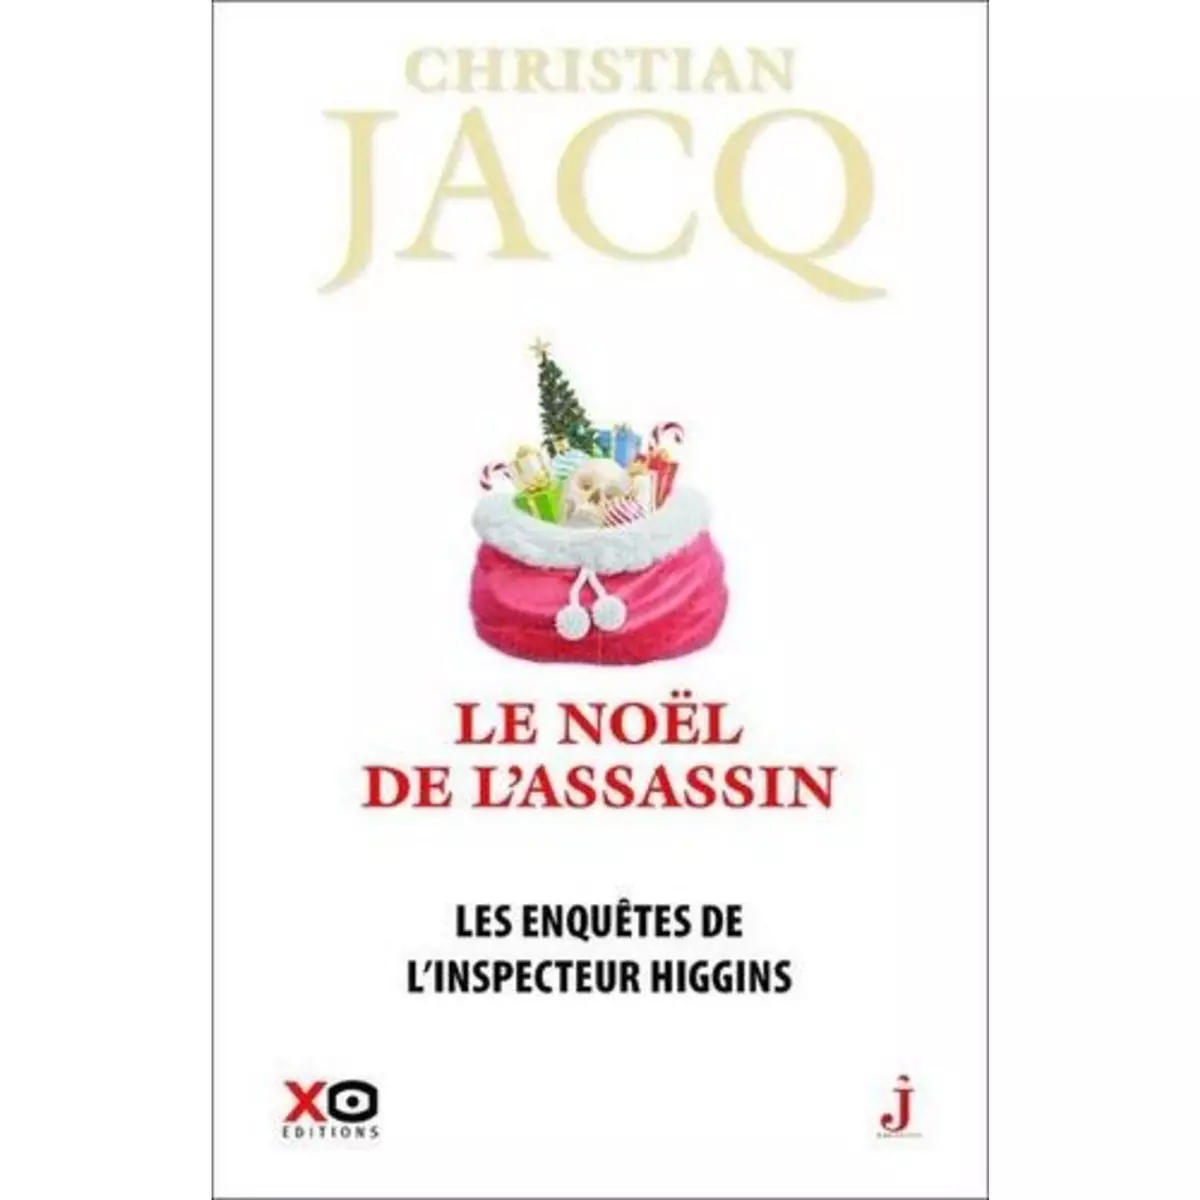  LES ENQUETES DE L'INSPECTEUR HIGGINS TOME 42 : LE NOEL DE L'ASSASSIN, Jacq Christian